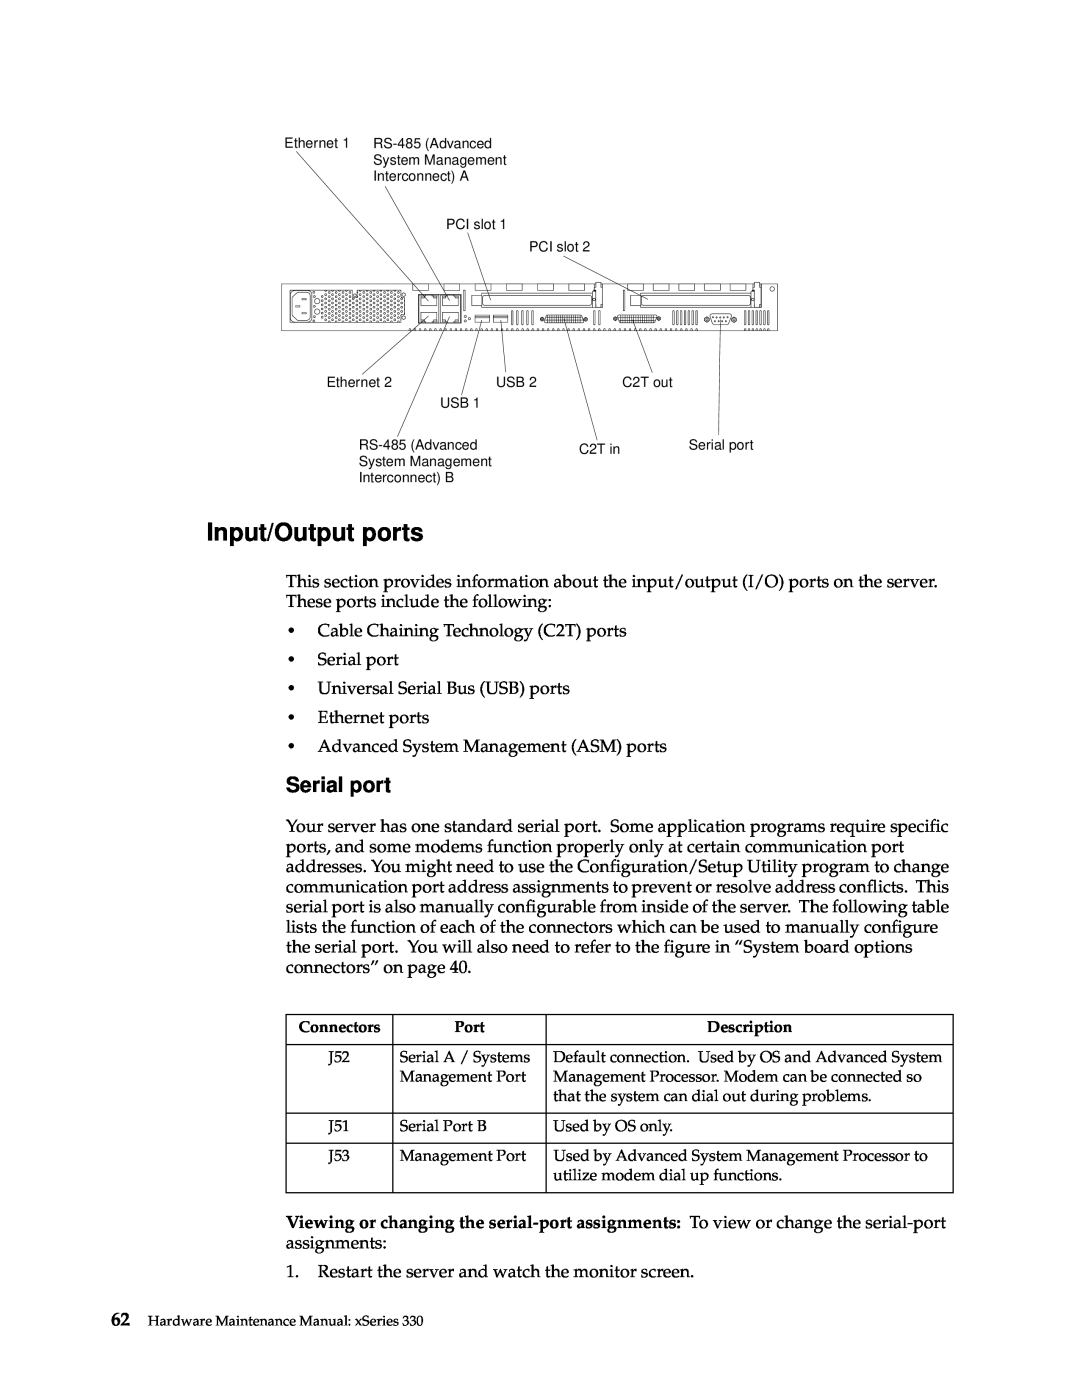 IBM xSeries 330 manual Input/Output ports, Serial port 